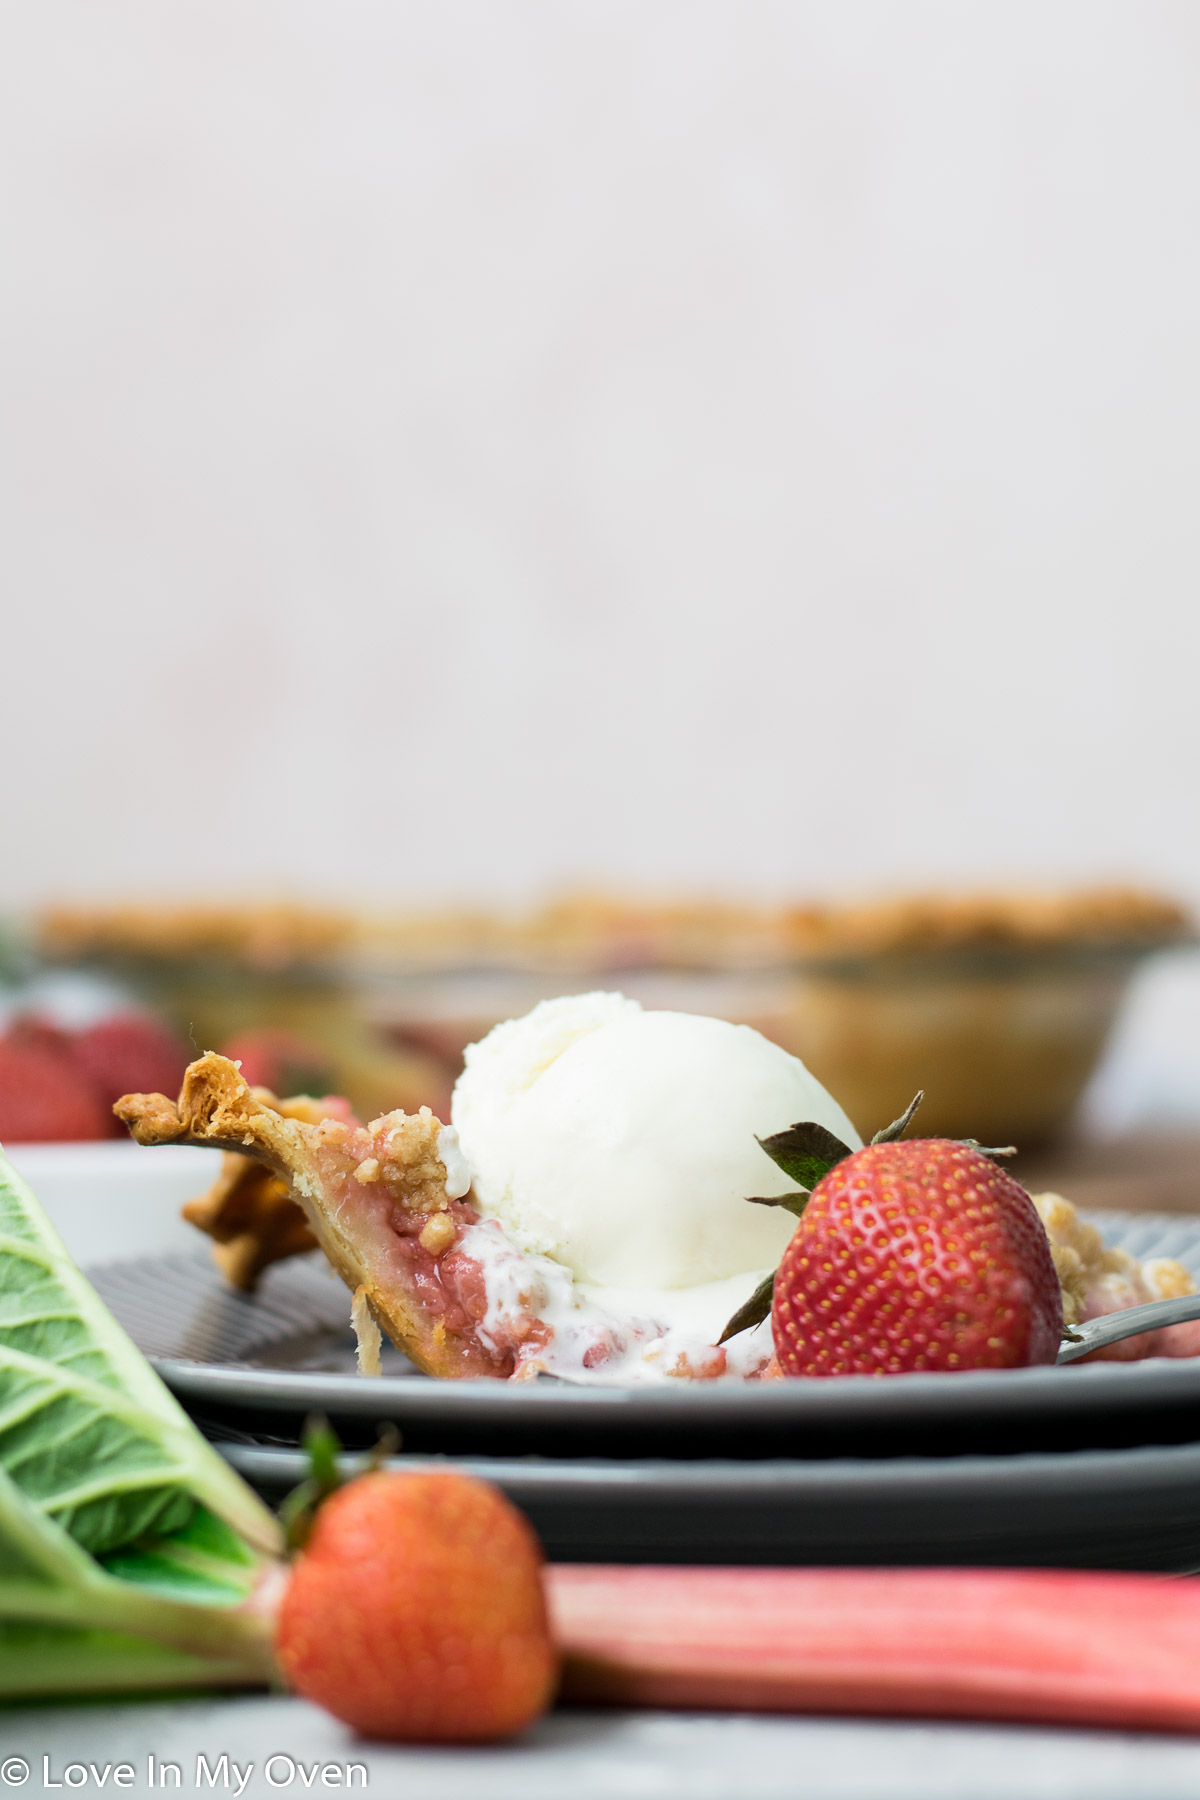 strawberry rhubarb crumble pie